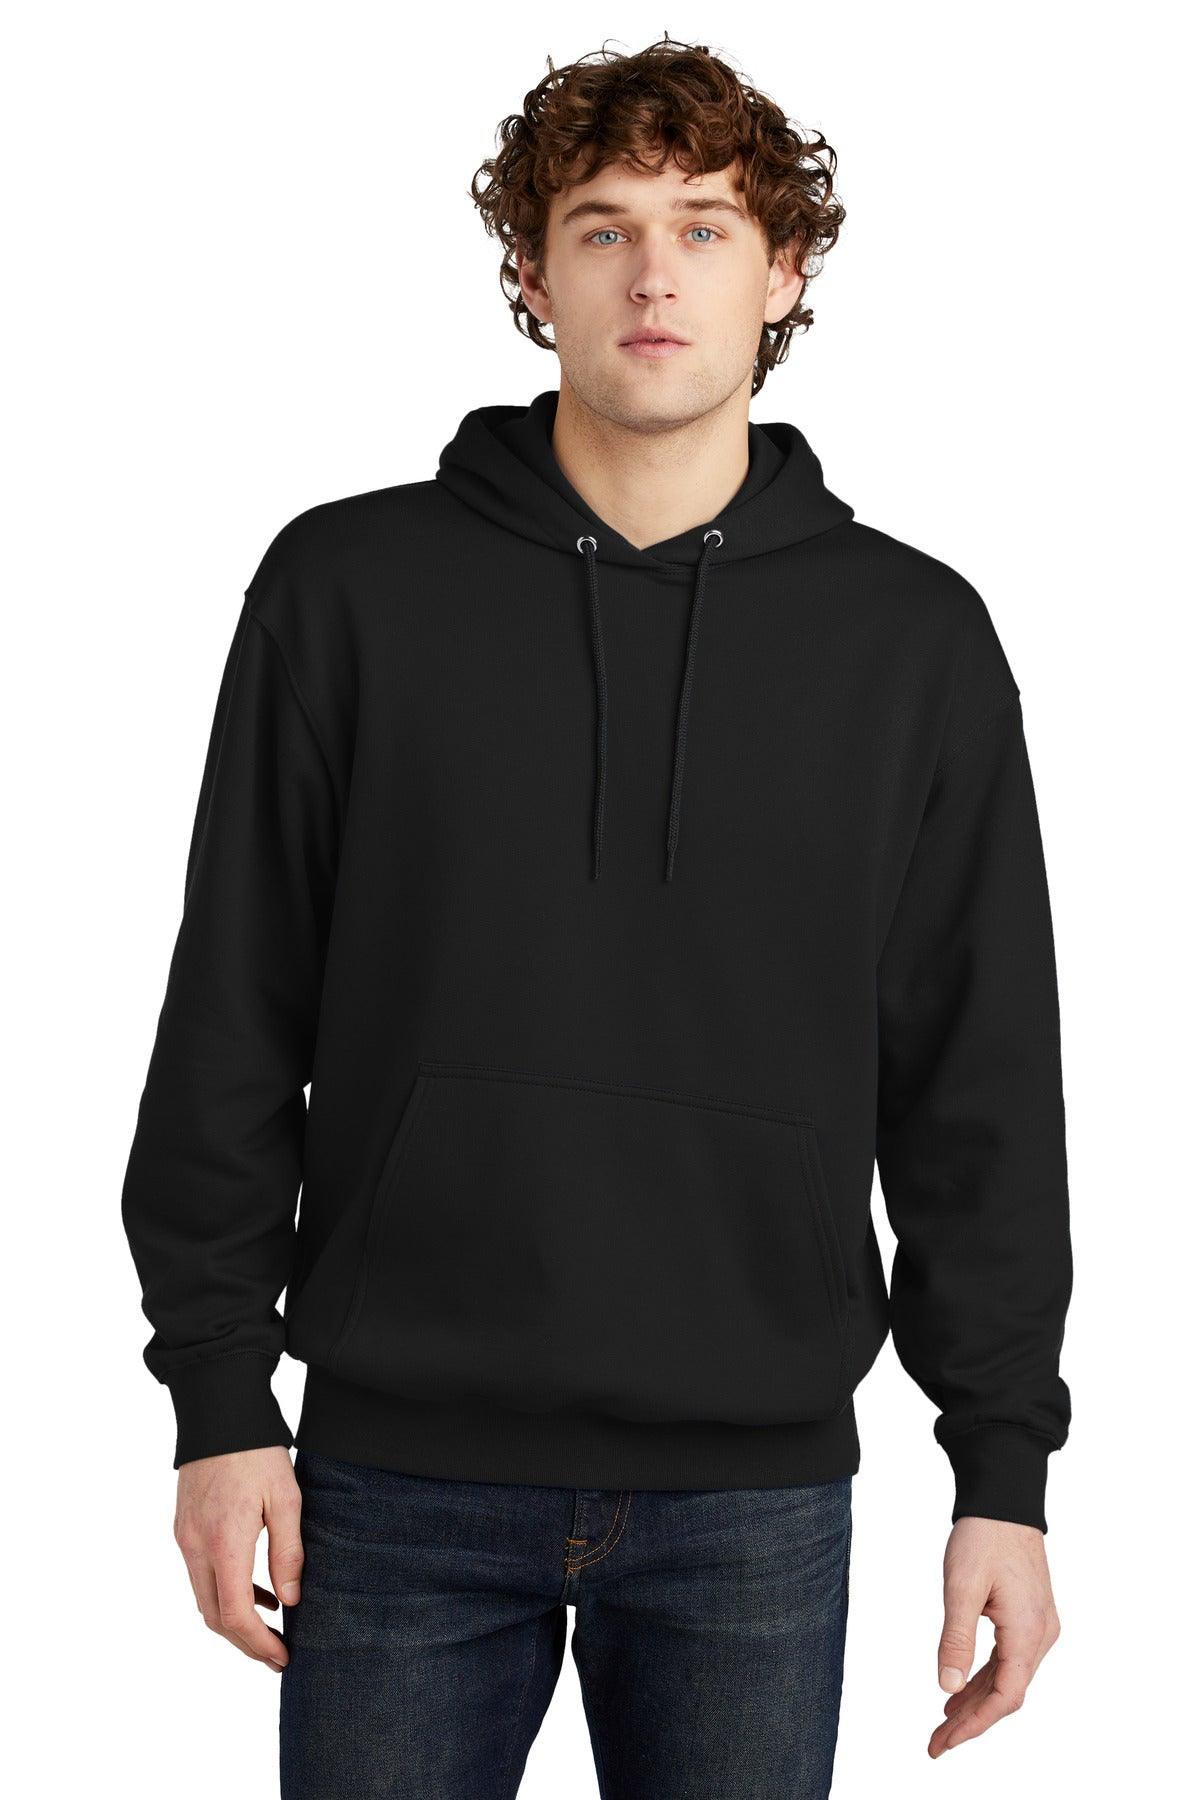 Port & Company Fleece Pullover Hooded Sweatshirt PC79H - Dresses Max